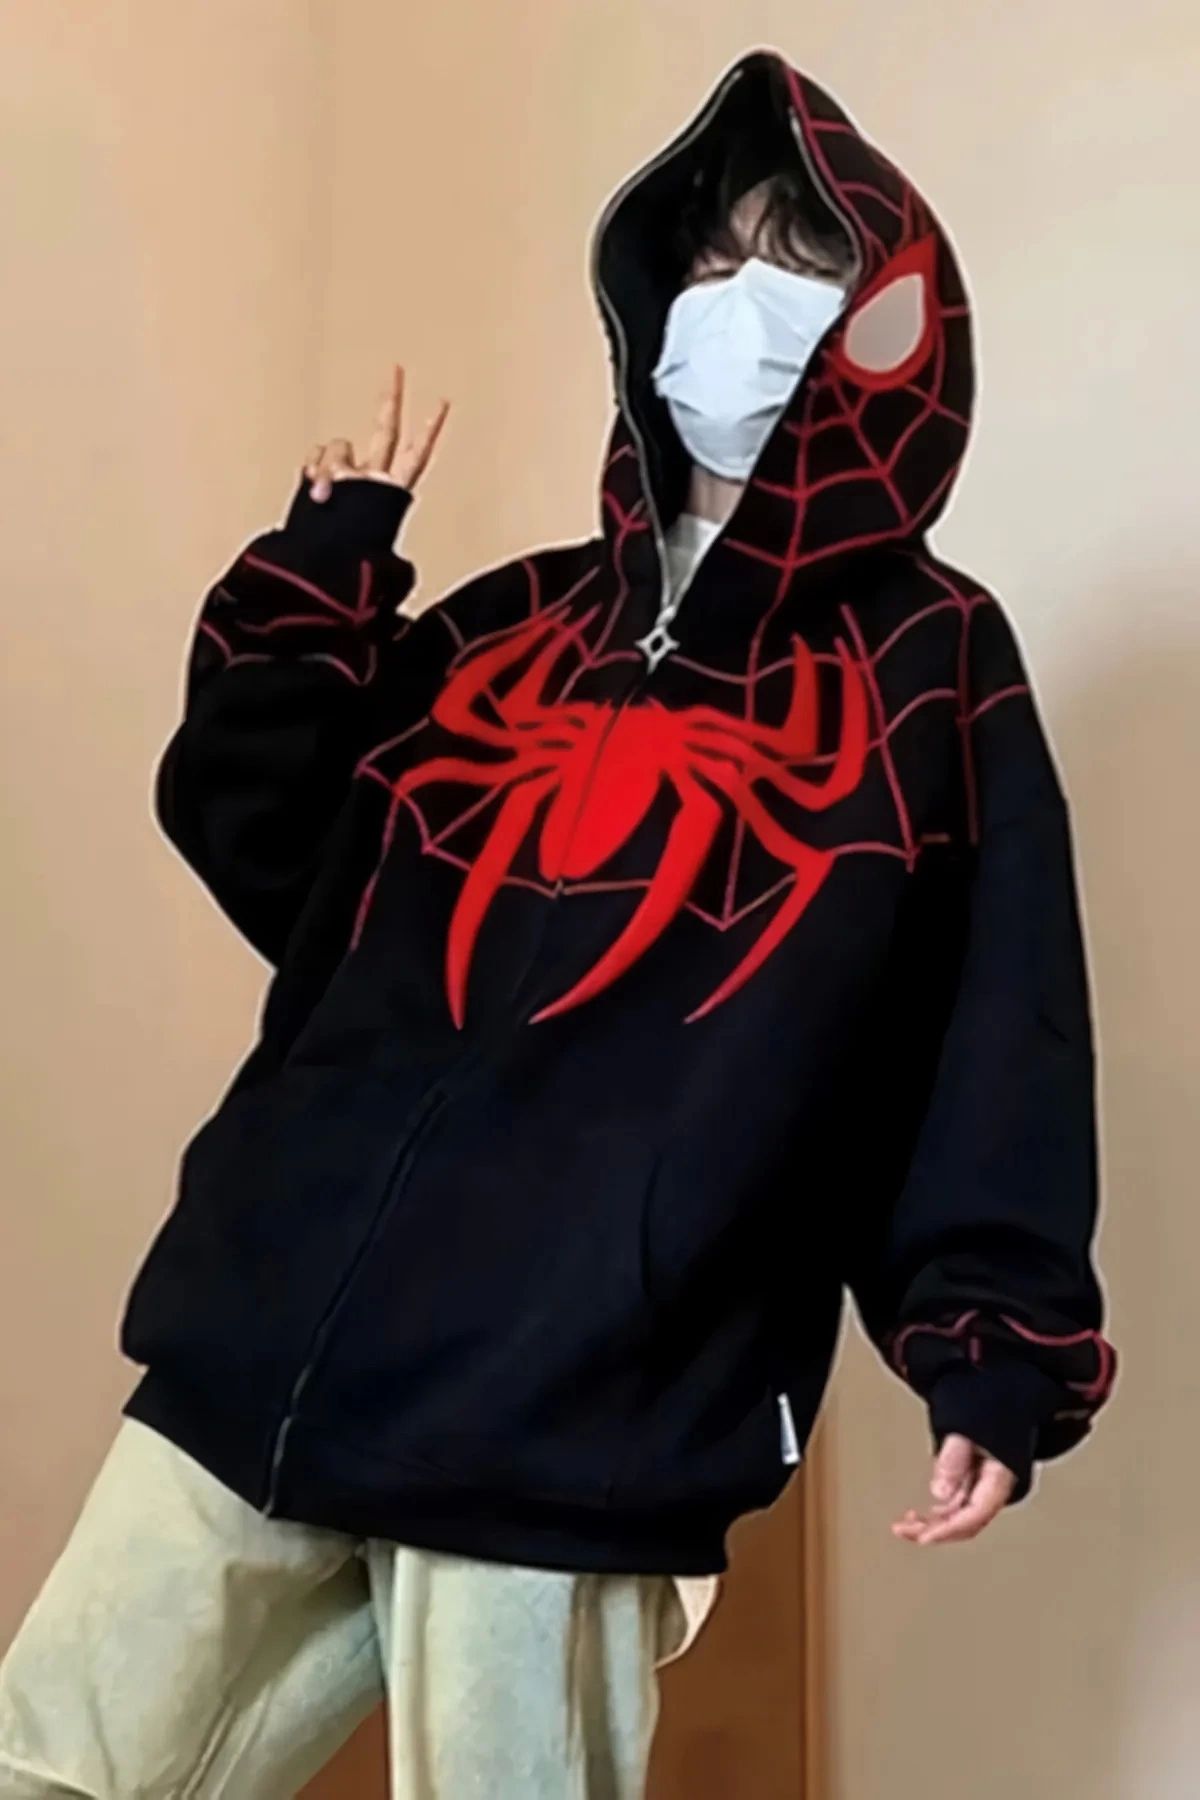 1blood Siyah Kapüşonlu Kırmızı Spiderman Maske Hırka